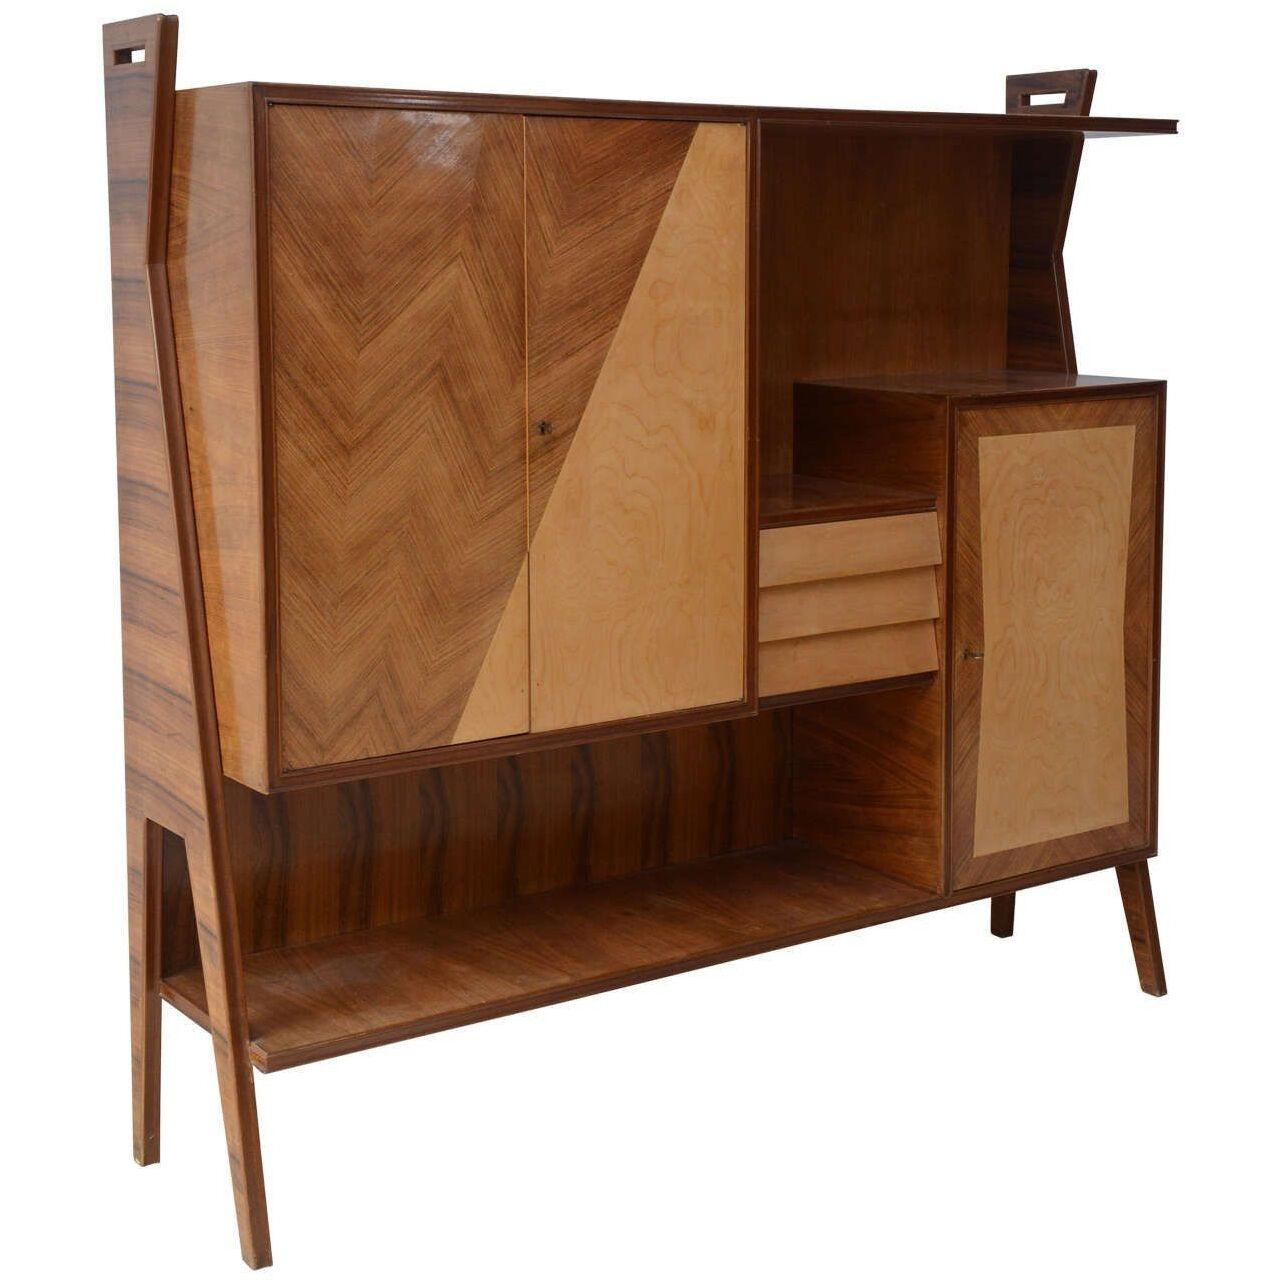 Italian Modern Walnut, Birch and Mahogany Cabinet or Bookcase, Arturo Reverso